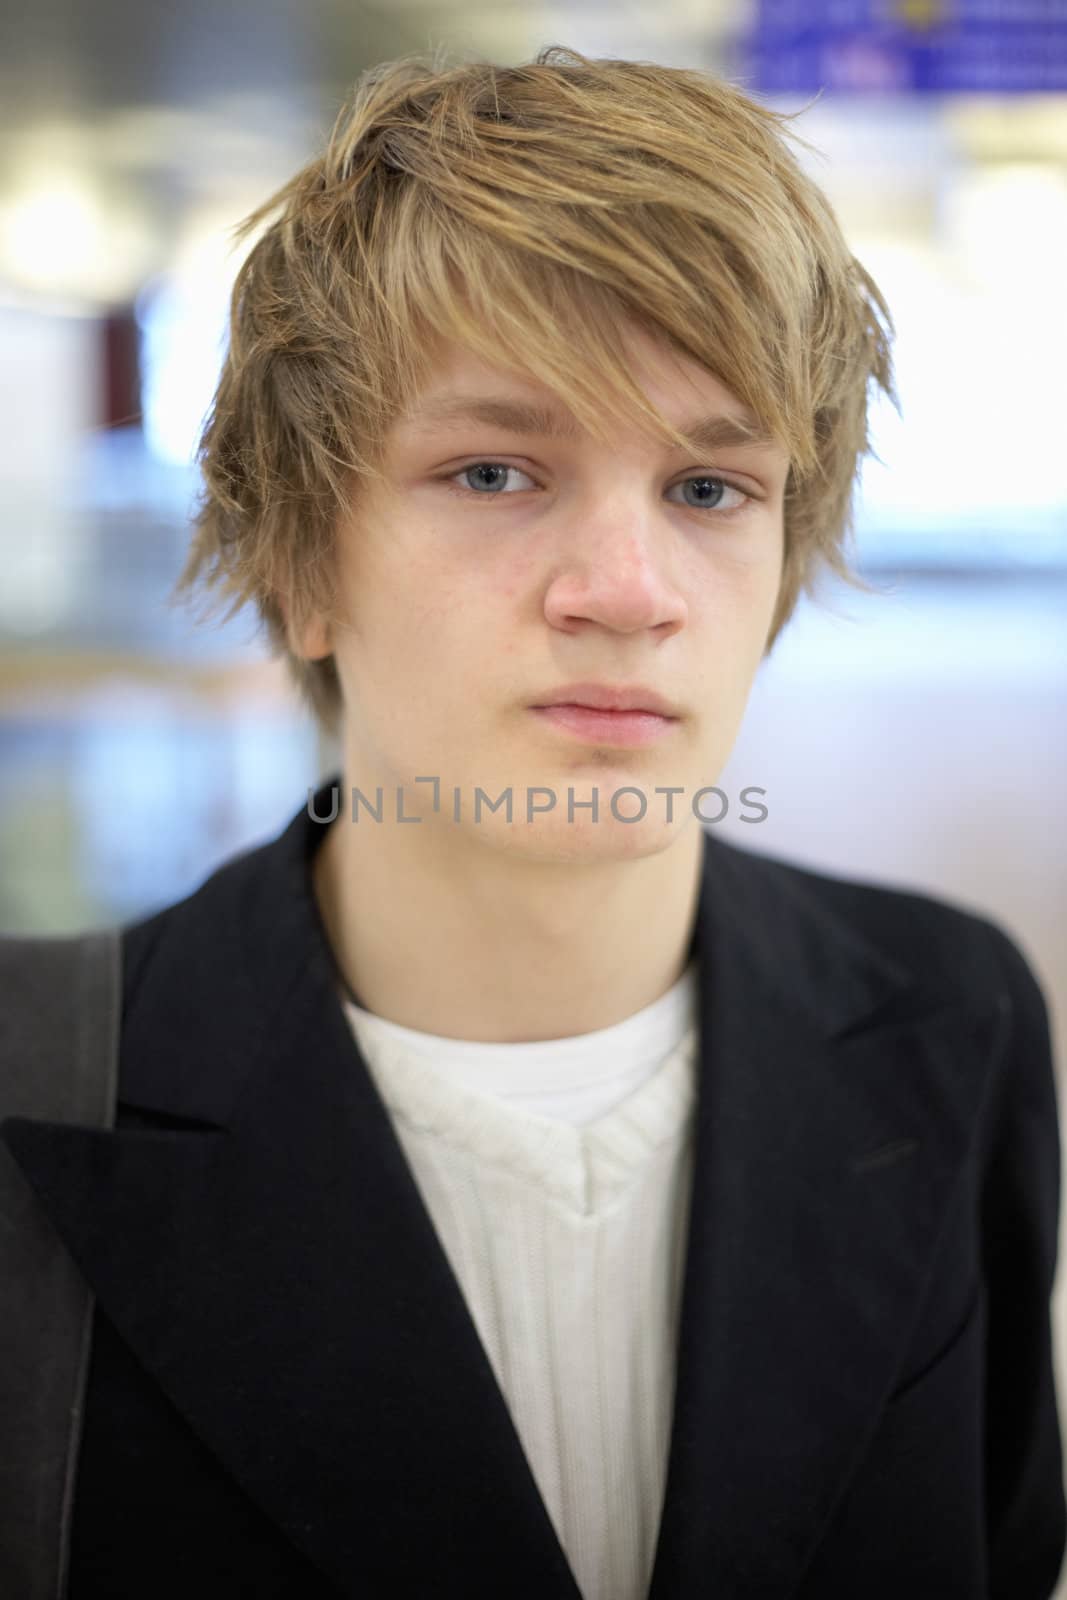 Teenage boy inside modern building, looking at camera